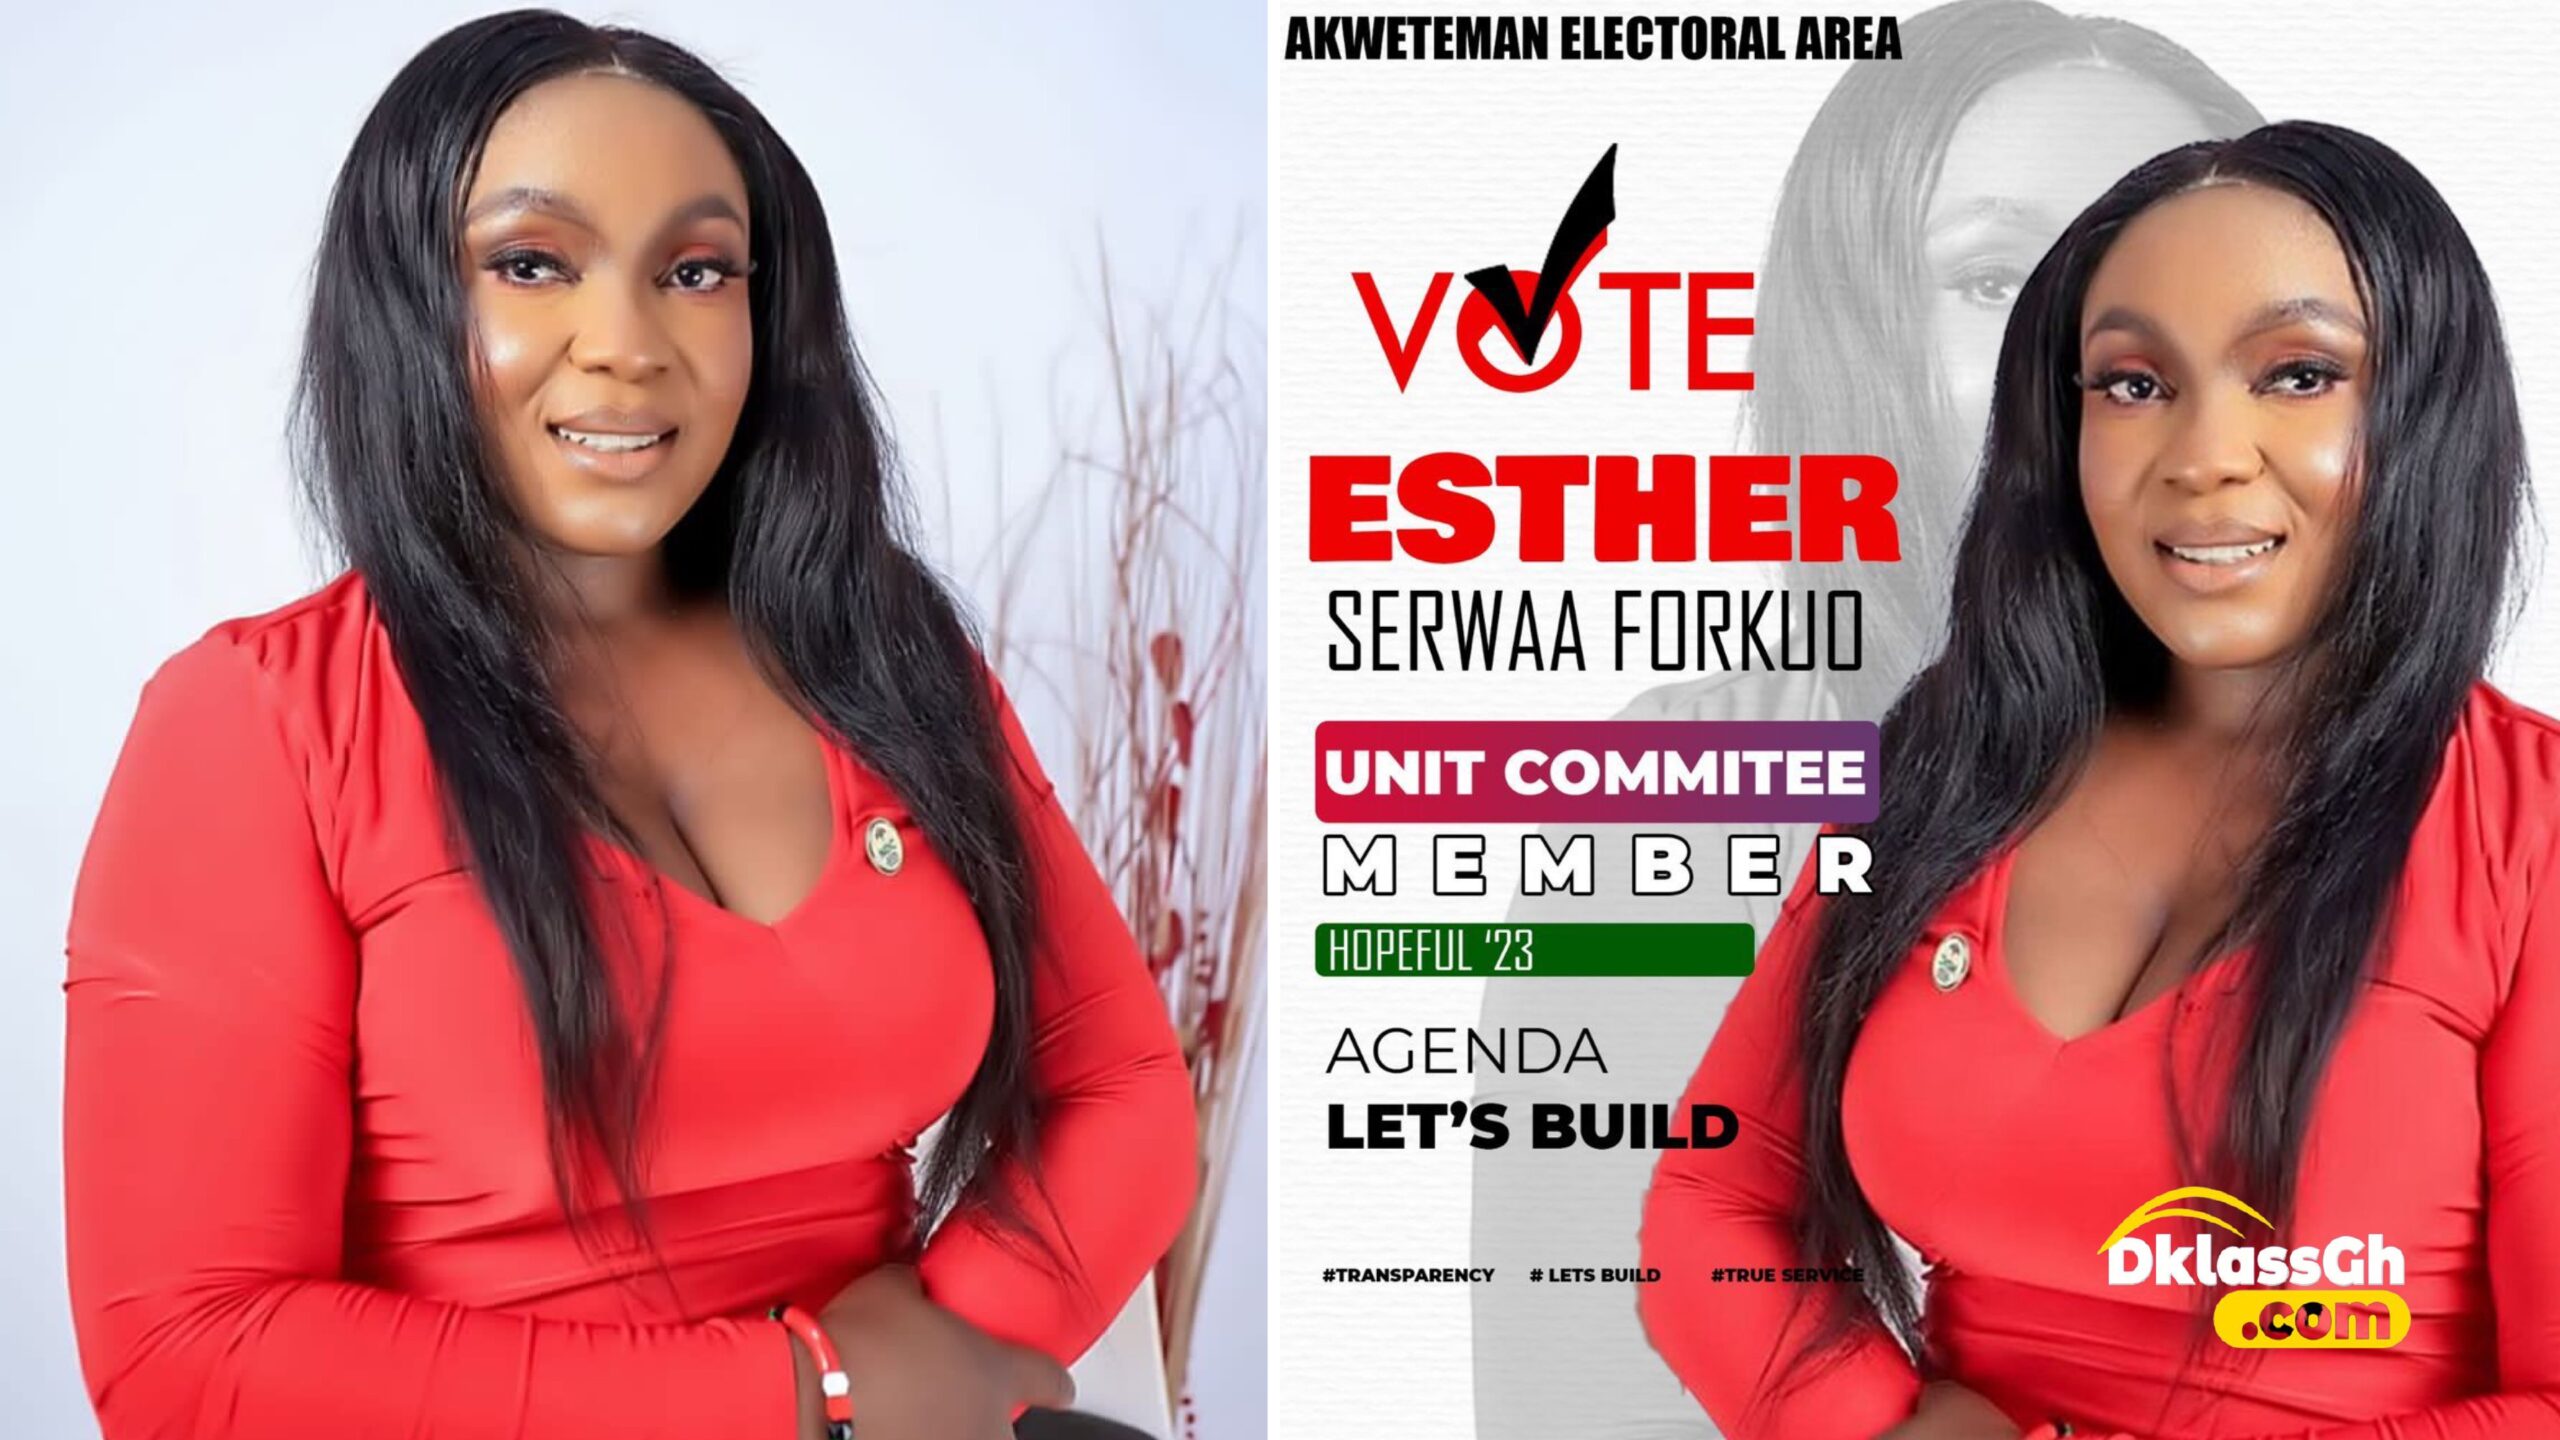 Meet Esther Serwaa Forkuo : Aspiring Unit Committee Member for Akweteman Electoral Area